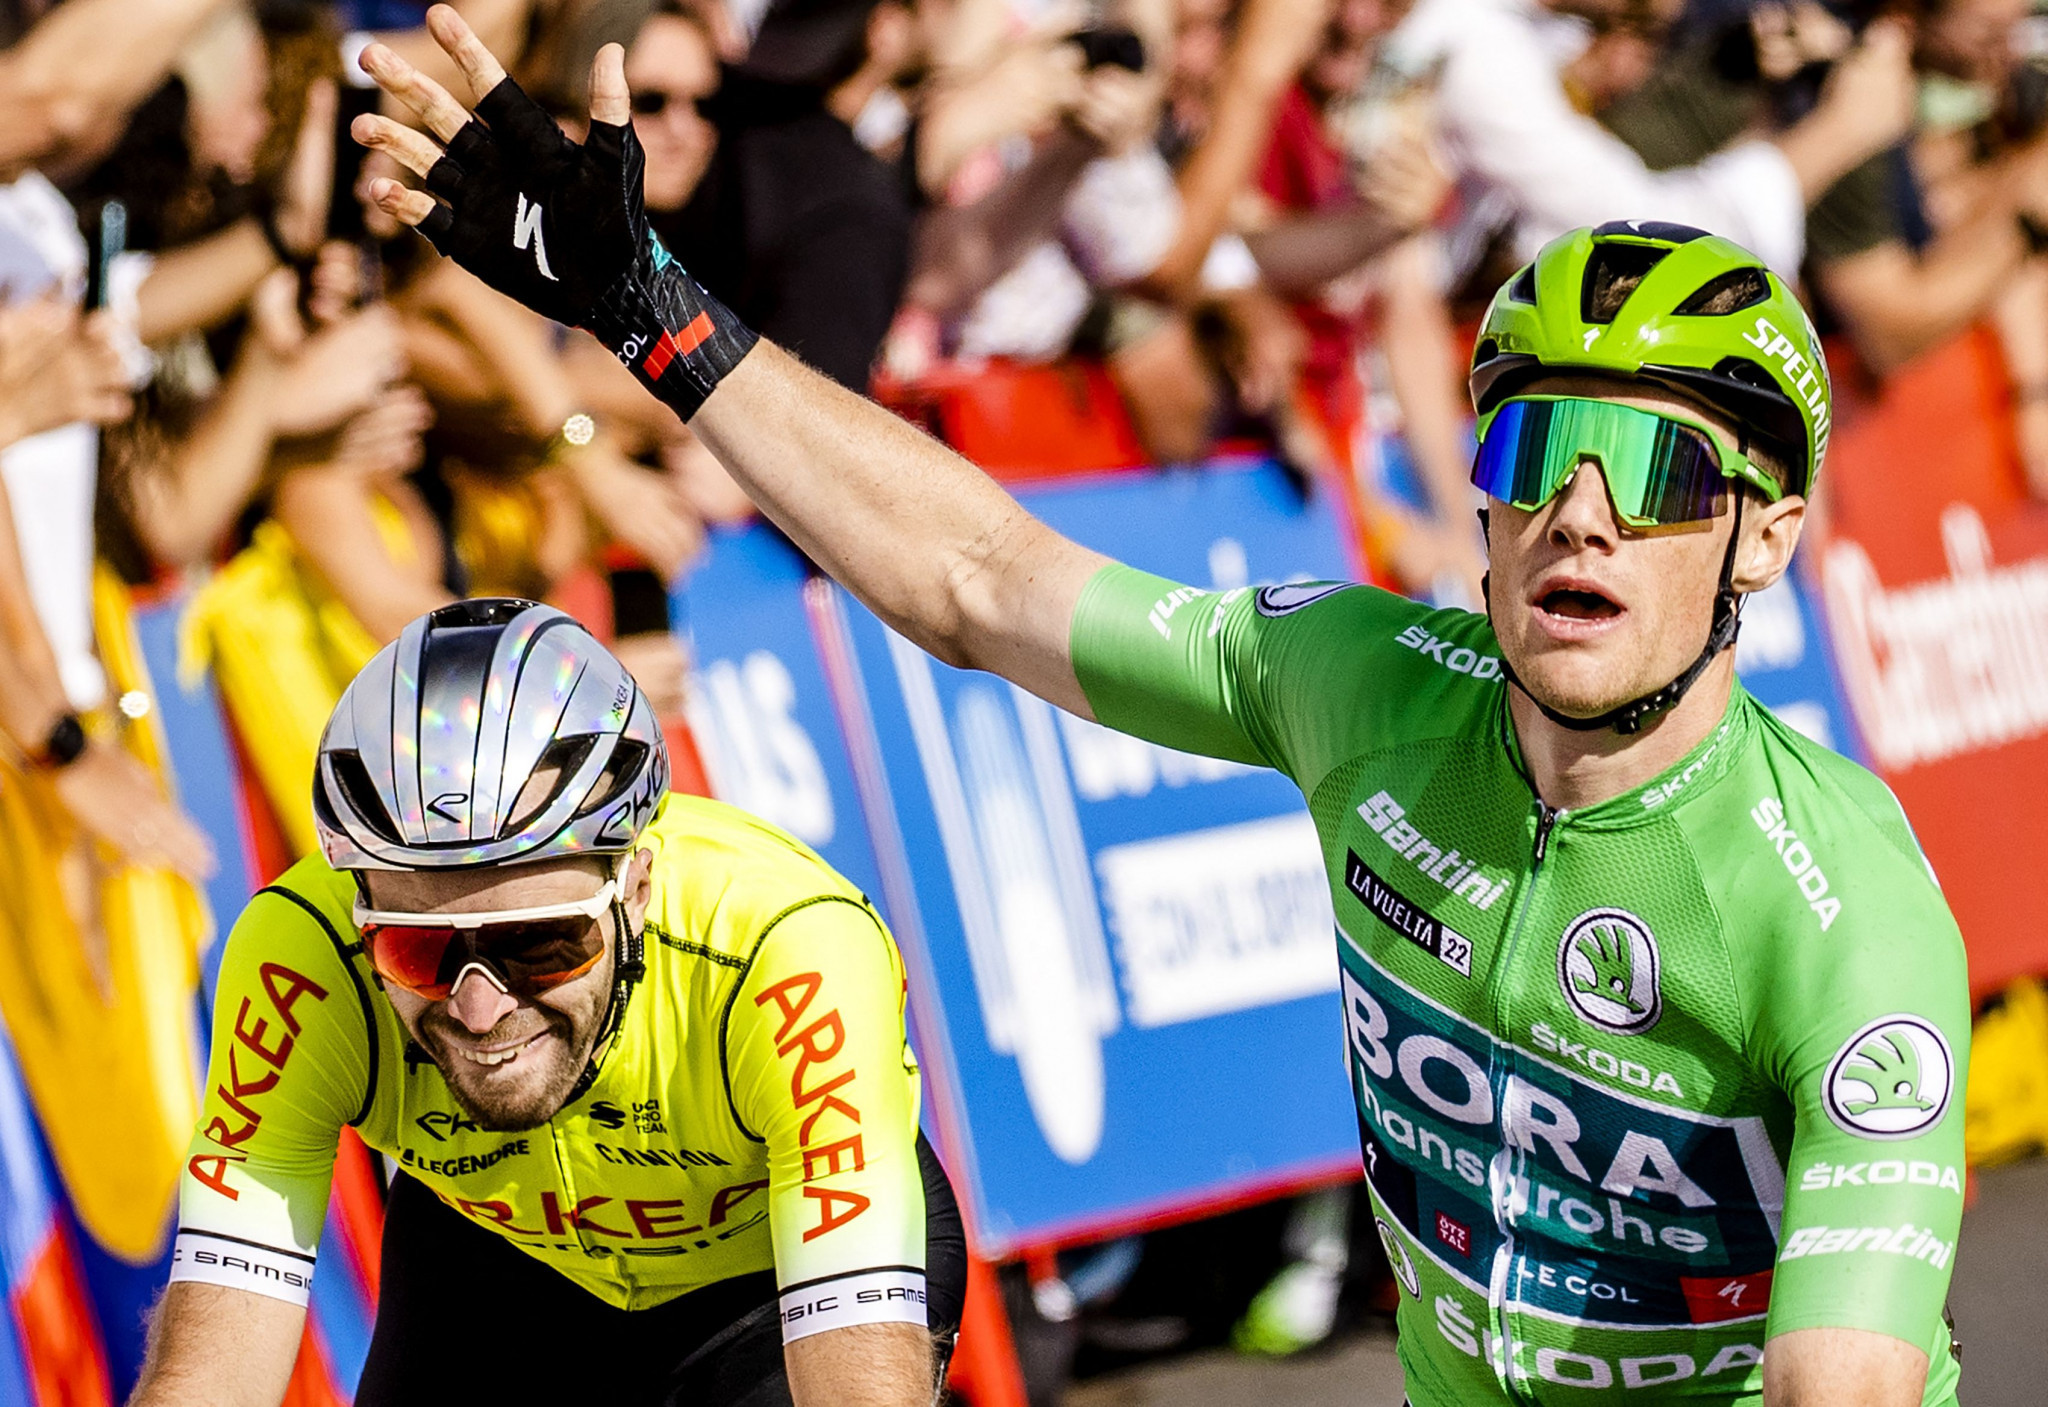 Bennett triumphs again as Dutch staging of the Vuelta a España concludes